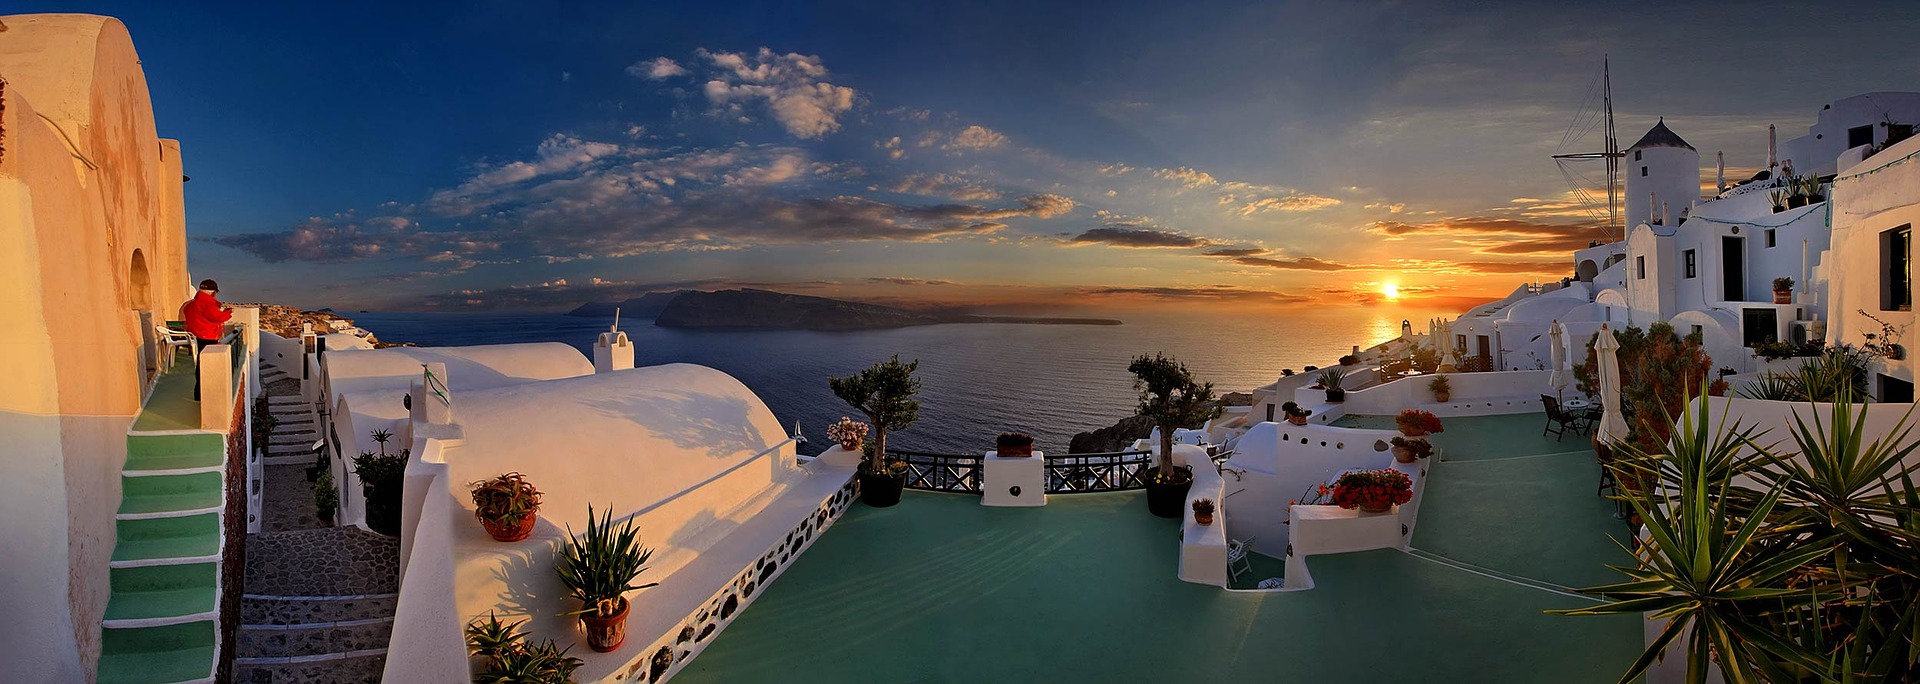 Santorini - Cruises in Greece - Greek cruises - Greek Travel Packages - Cruise Greek islands - Travel to Greek islands - Tours in Greece - Atlantis Travel Agency in Greece